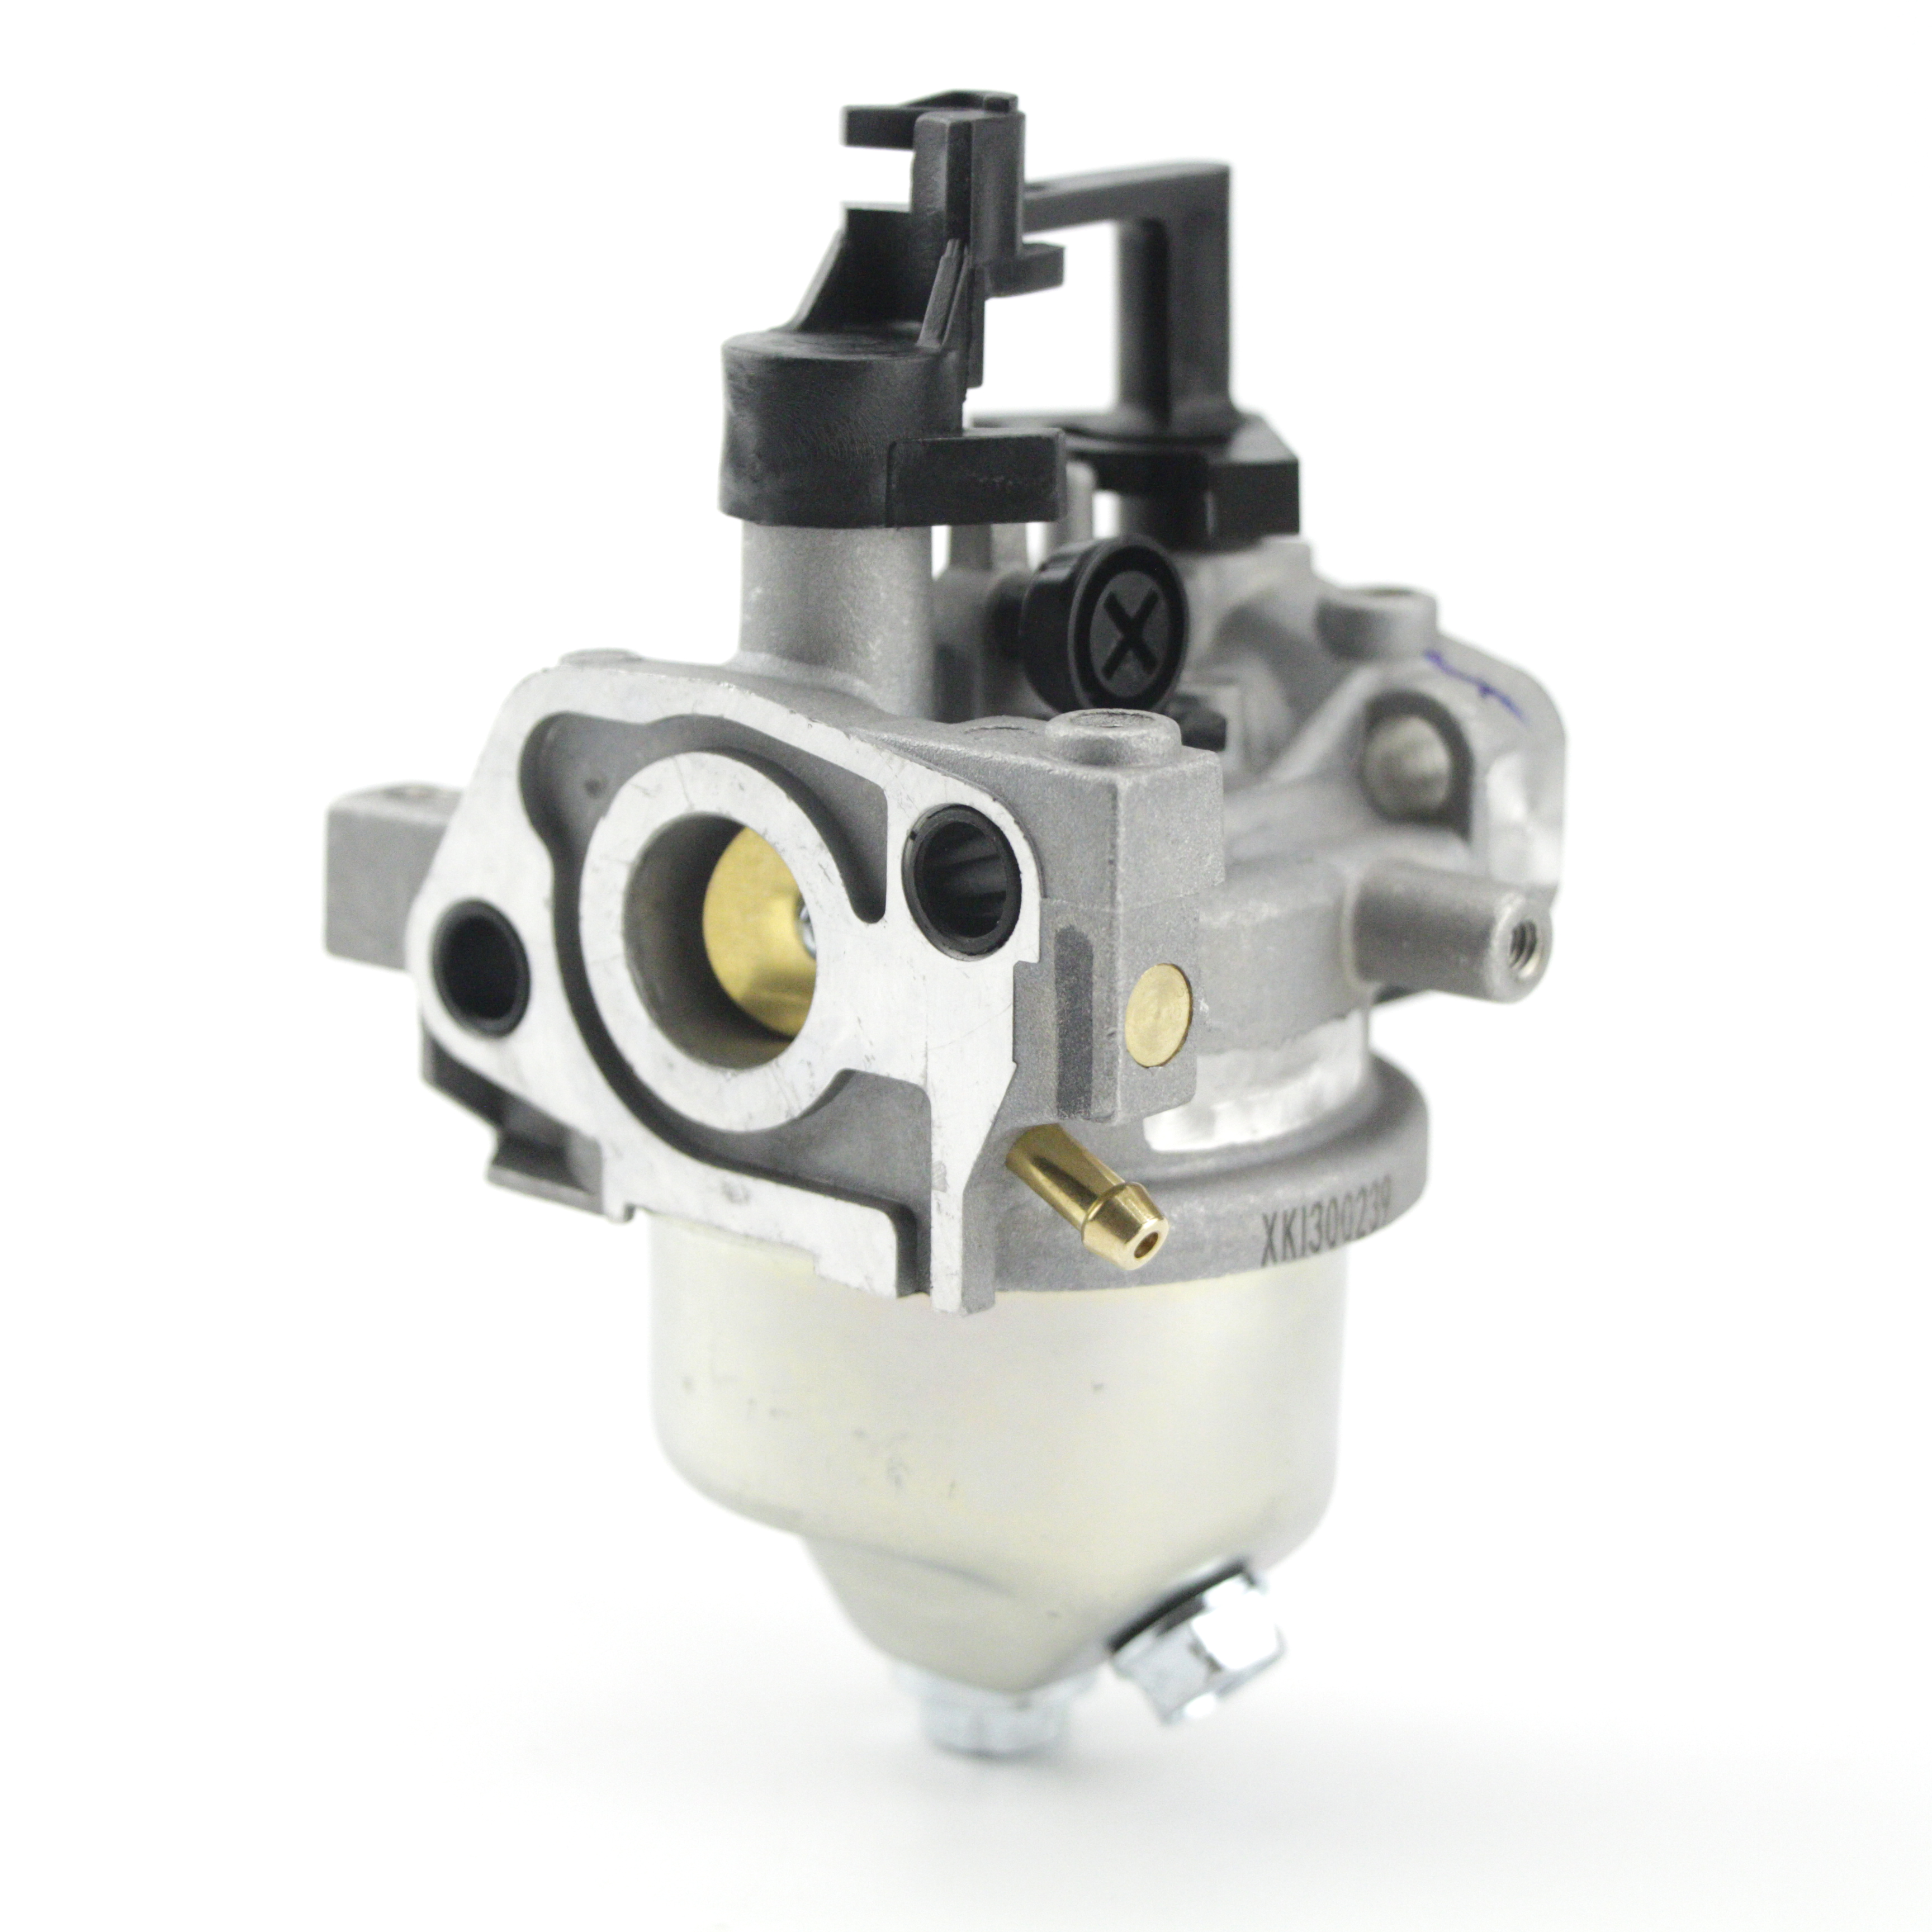 Details about   Carburetor For Kohler XT149 XT650 XT675 Engine with Gaskets Fuel Filter Carb 